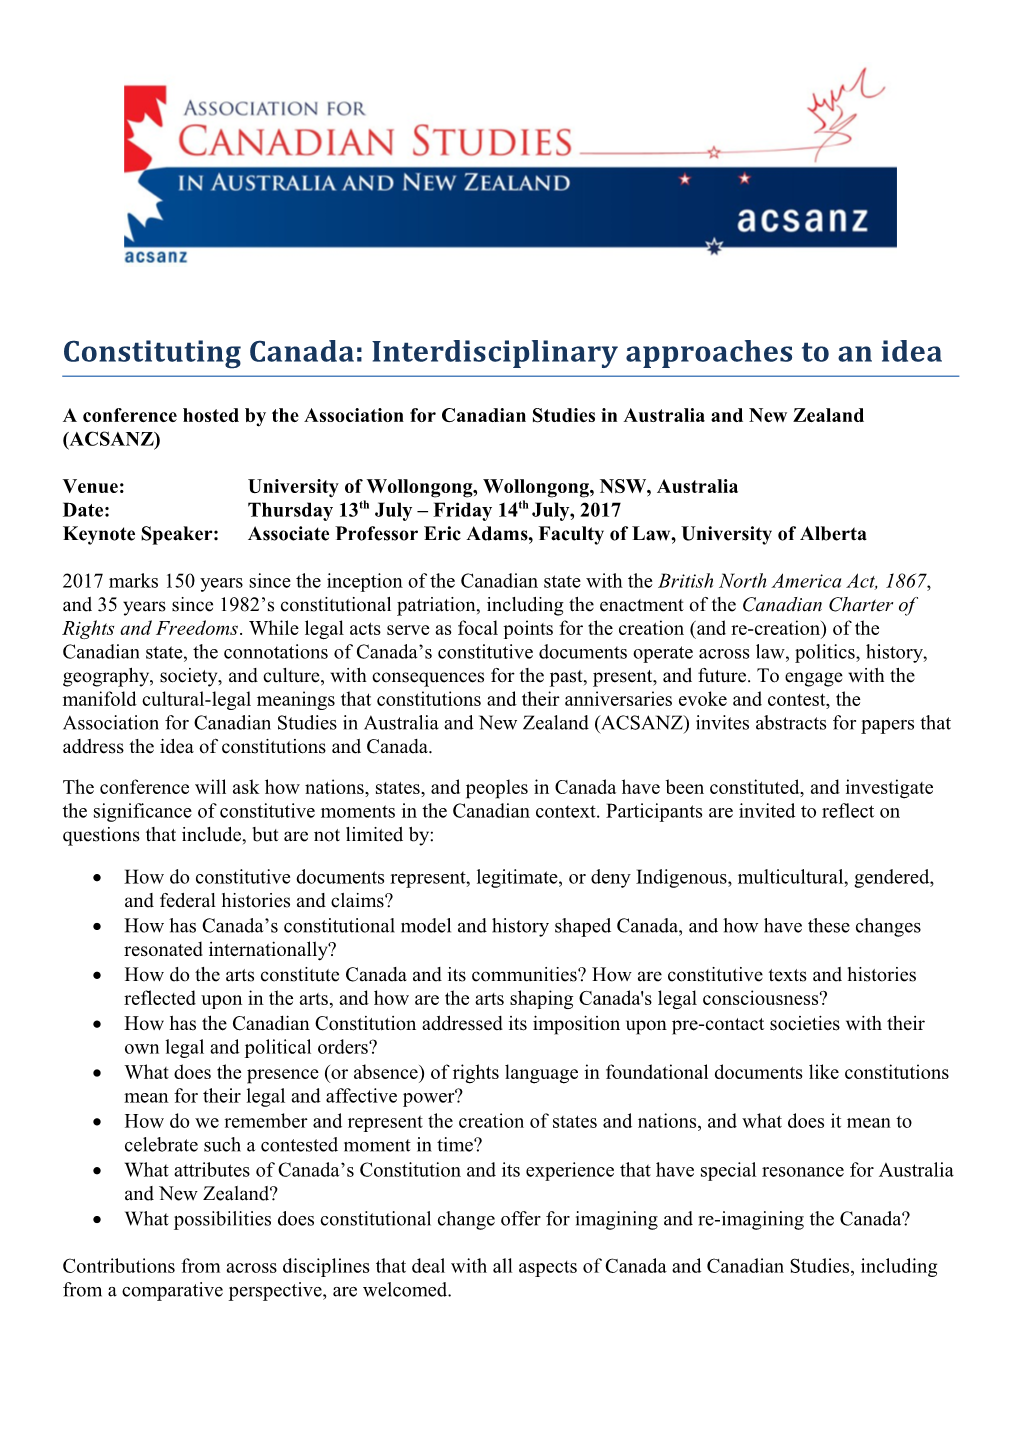 Constituting Canada: Interdisciplinary Approaches to an Idea